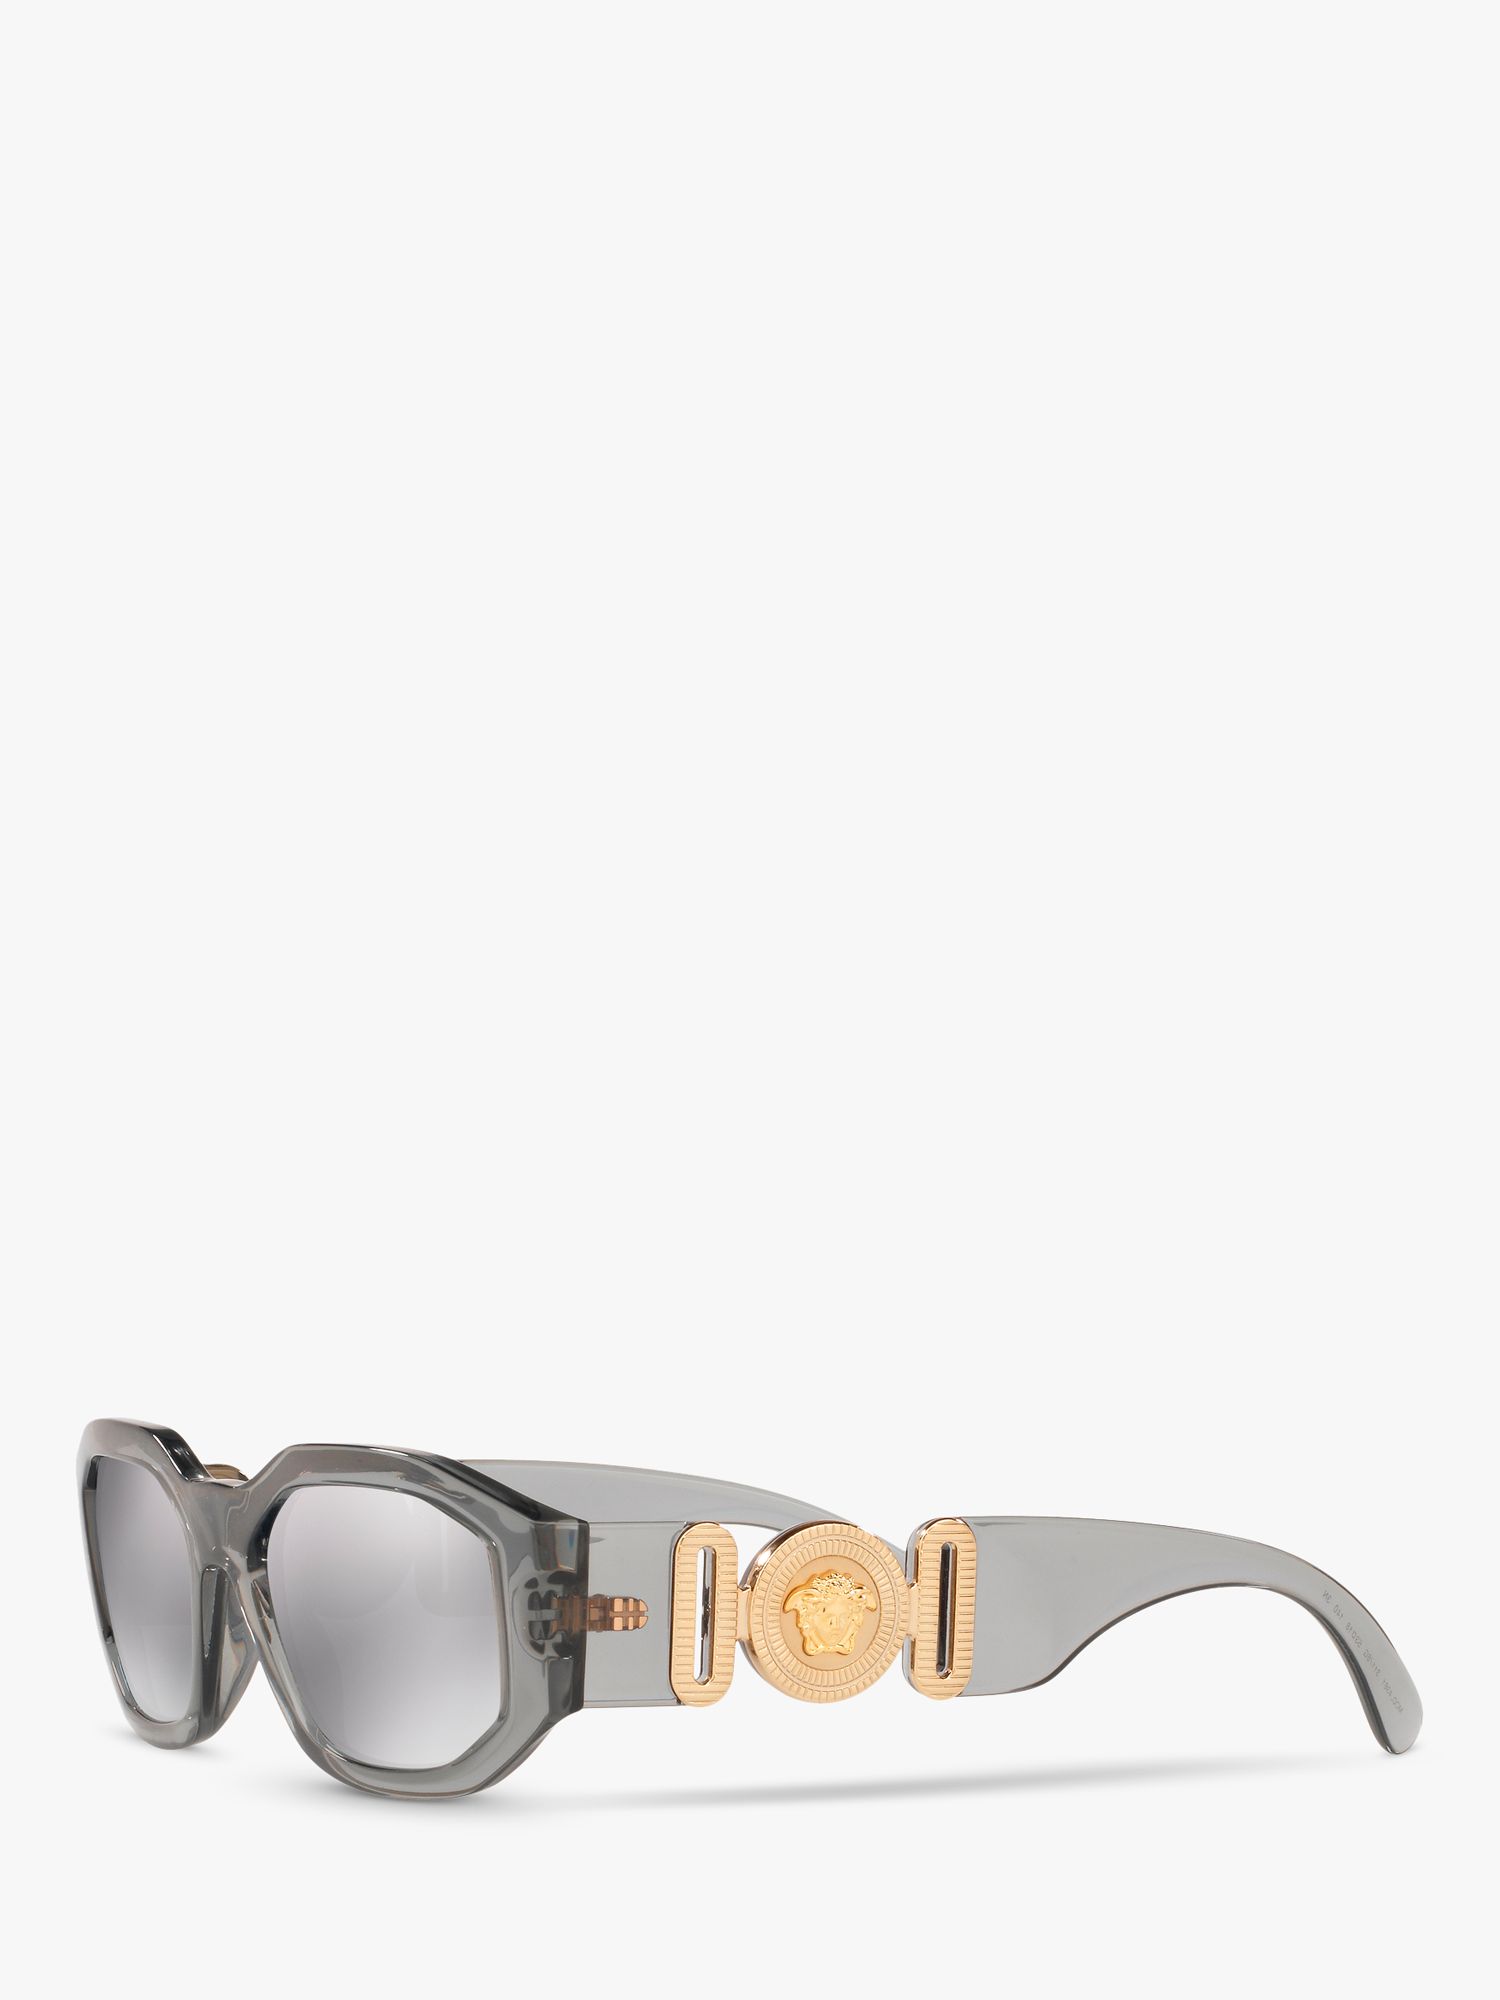 Buy Versace VE4361 Men's Irregular Sunglasses, Grey/Mirror Silver Online at johnlewis.com